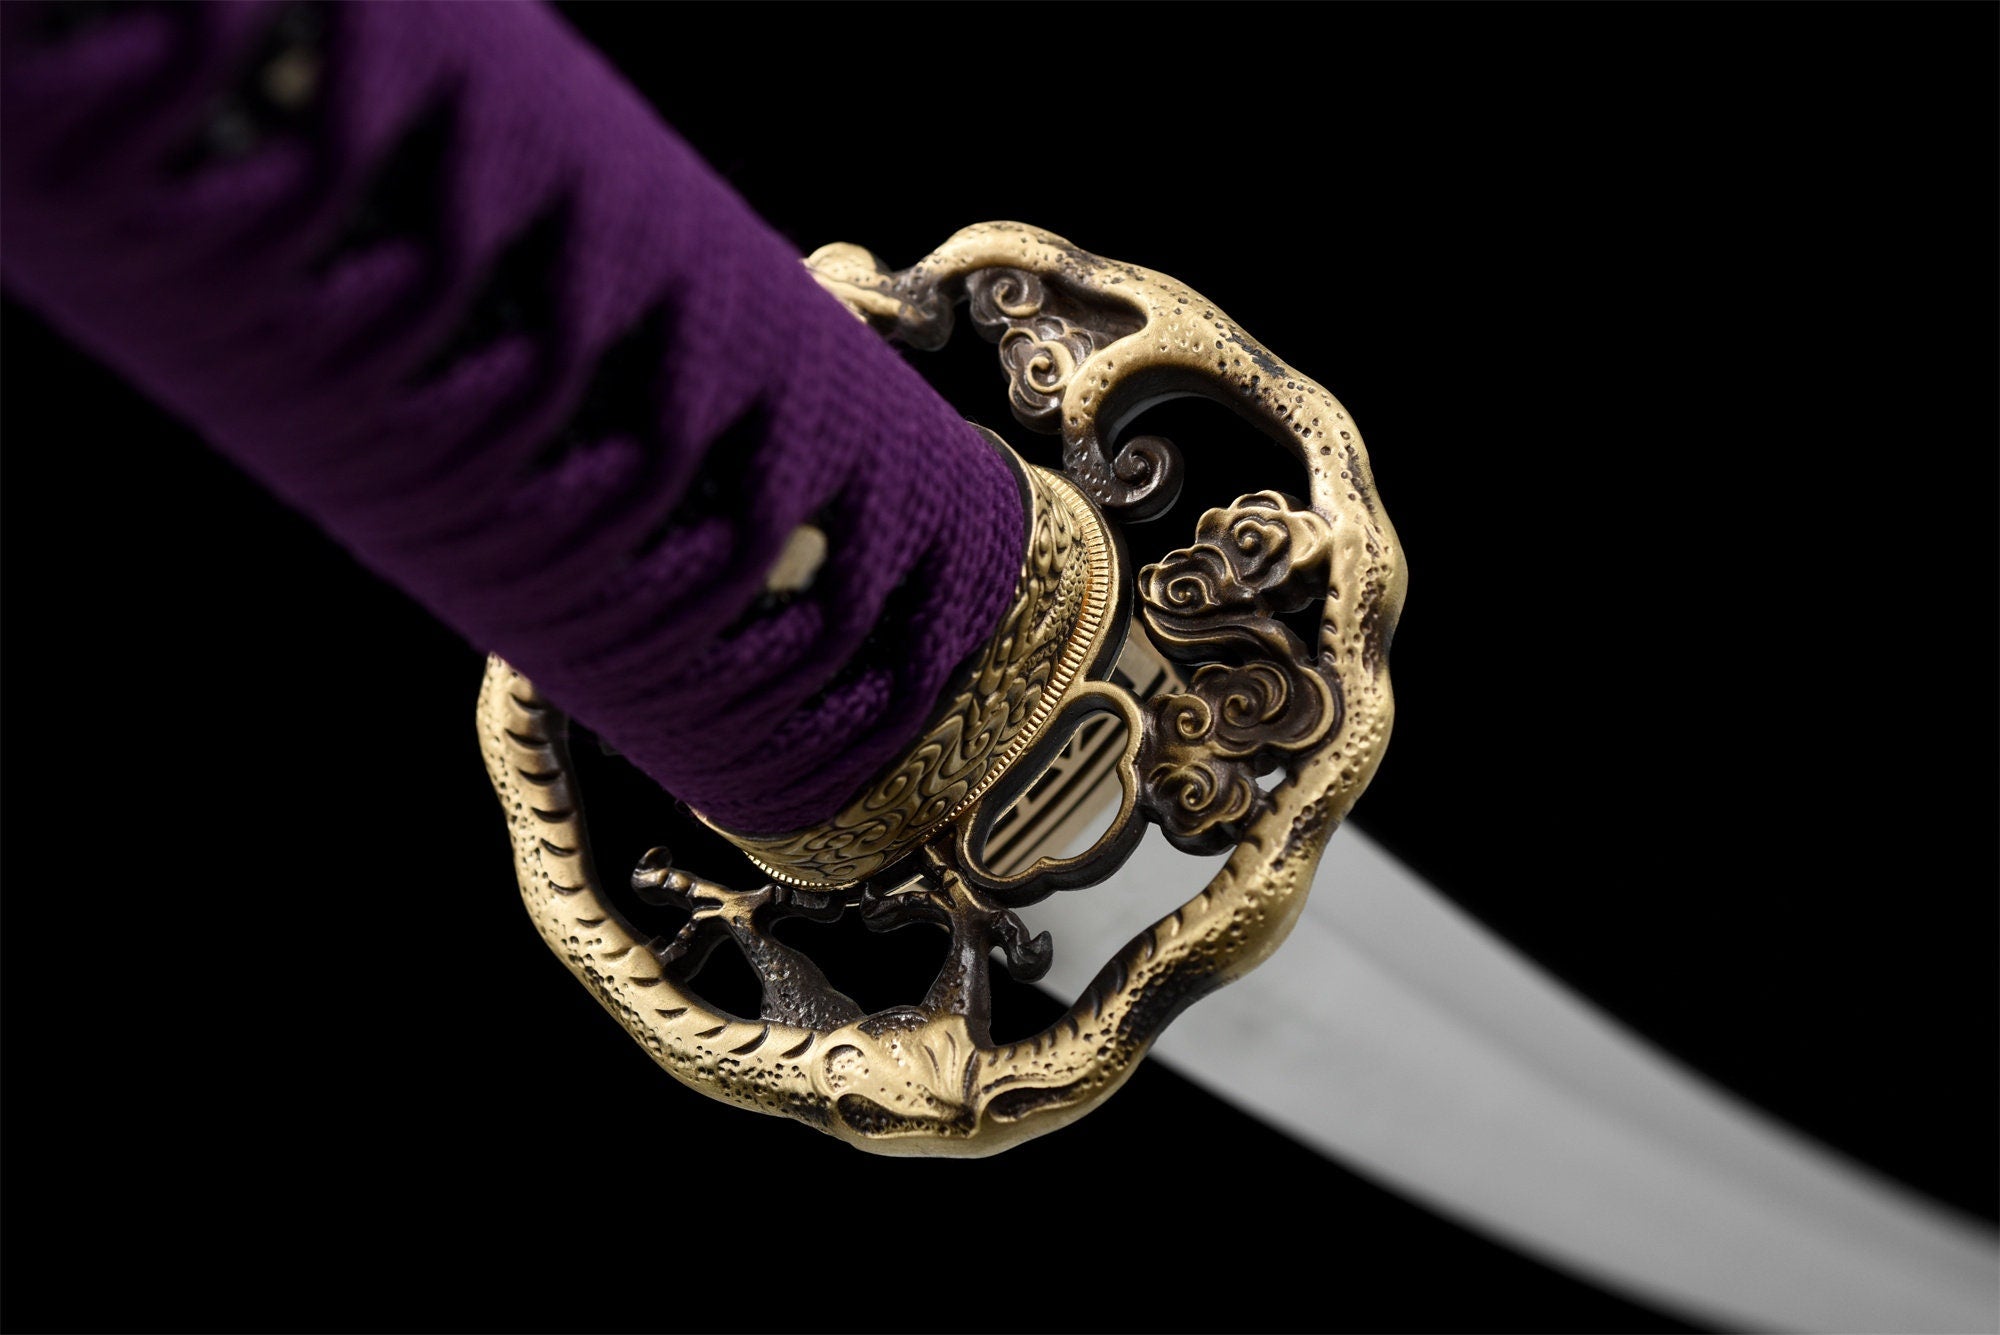 T10 Steel Clay Tempered With Hamon Handmade Colored Sheath Katana Sword Real Japanese Samurai Sword Full Tang